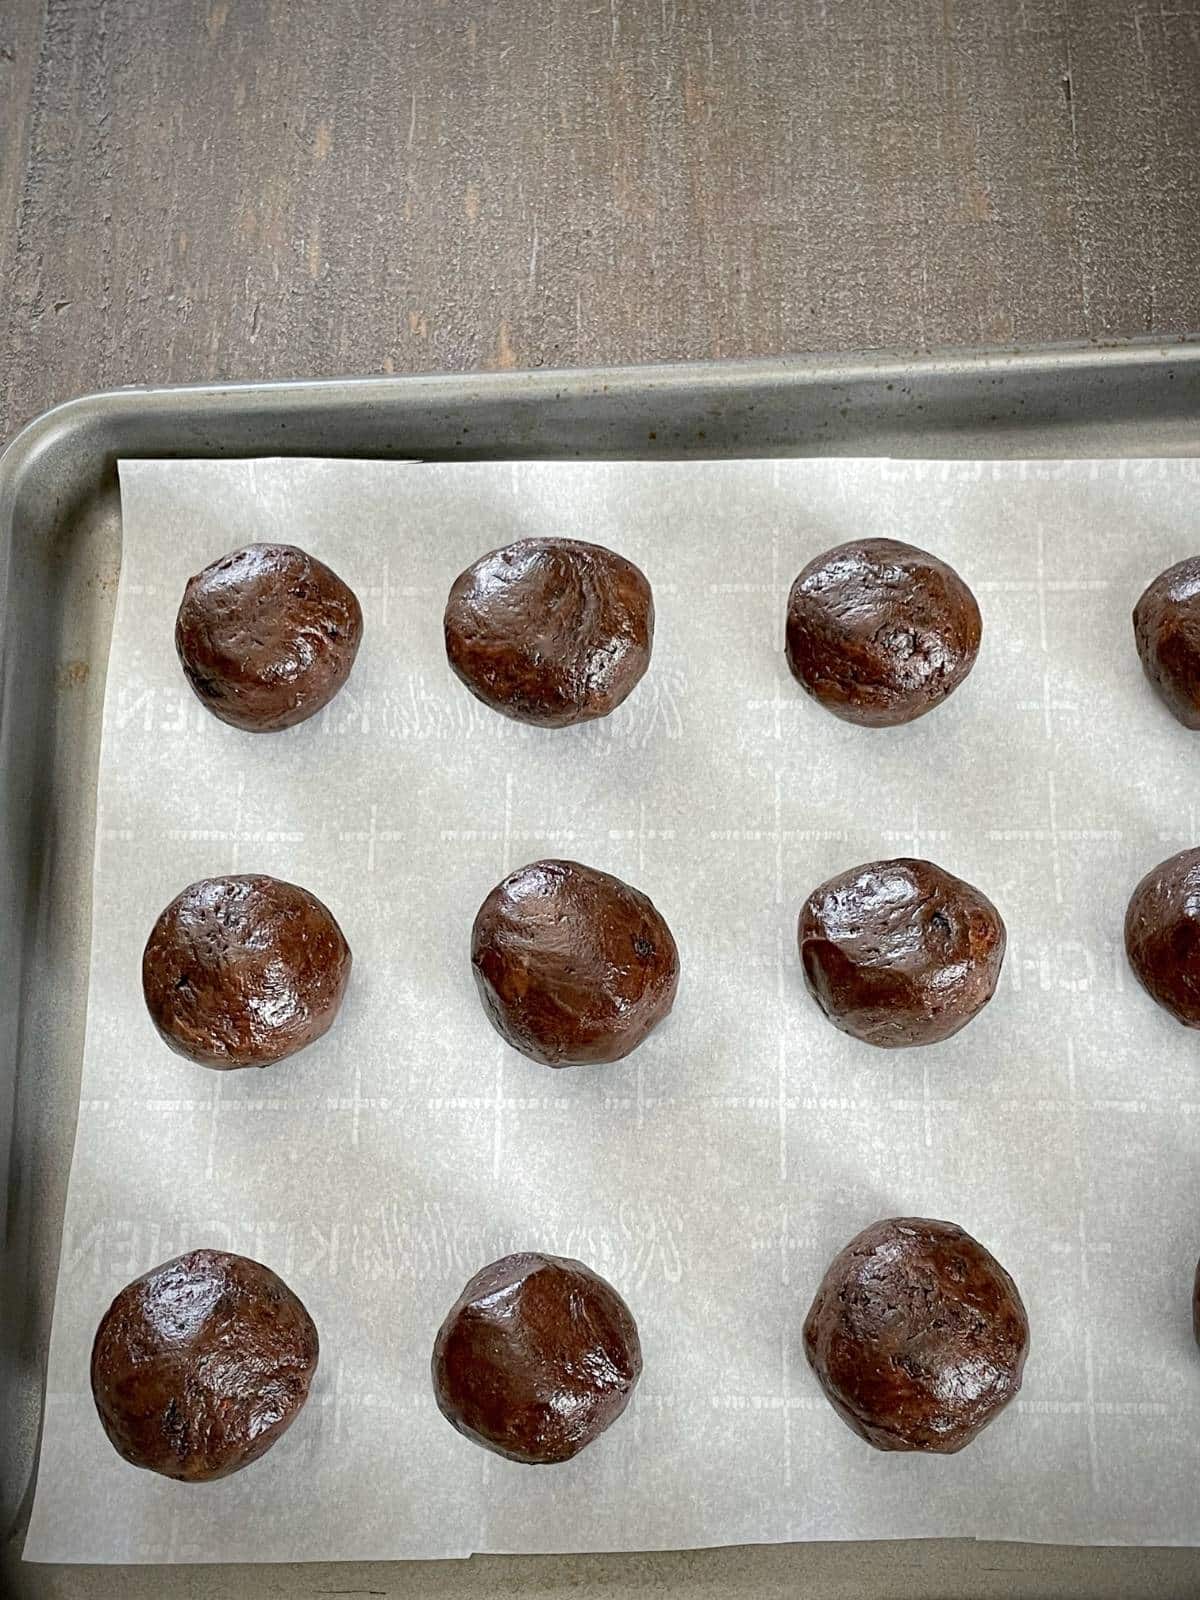 Truffle balls on a lined baking sheet.